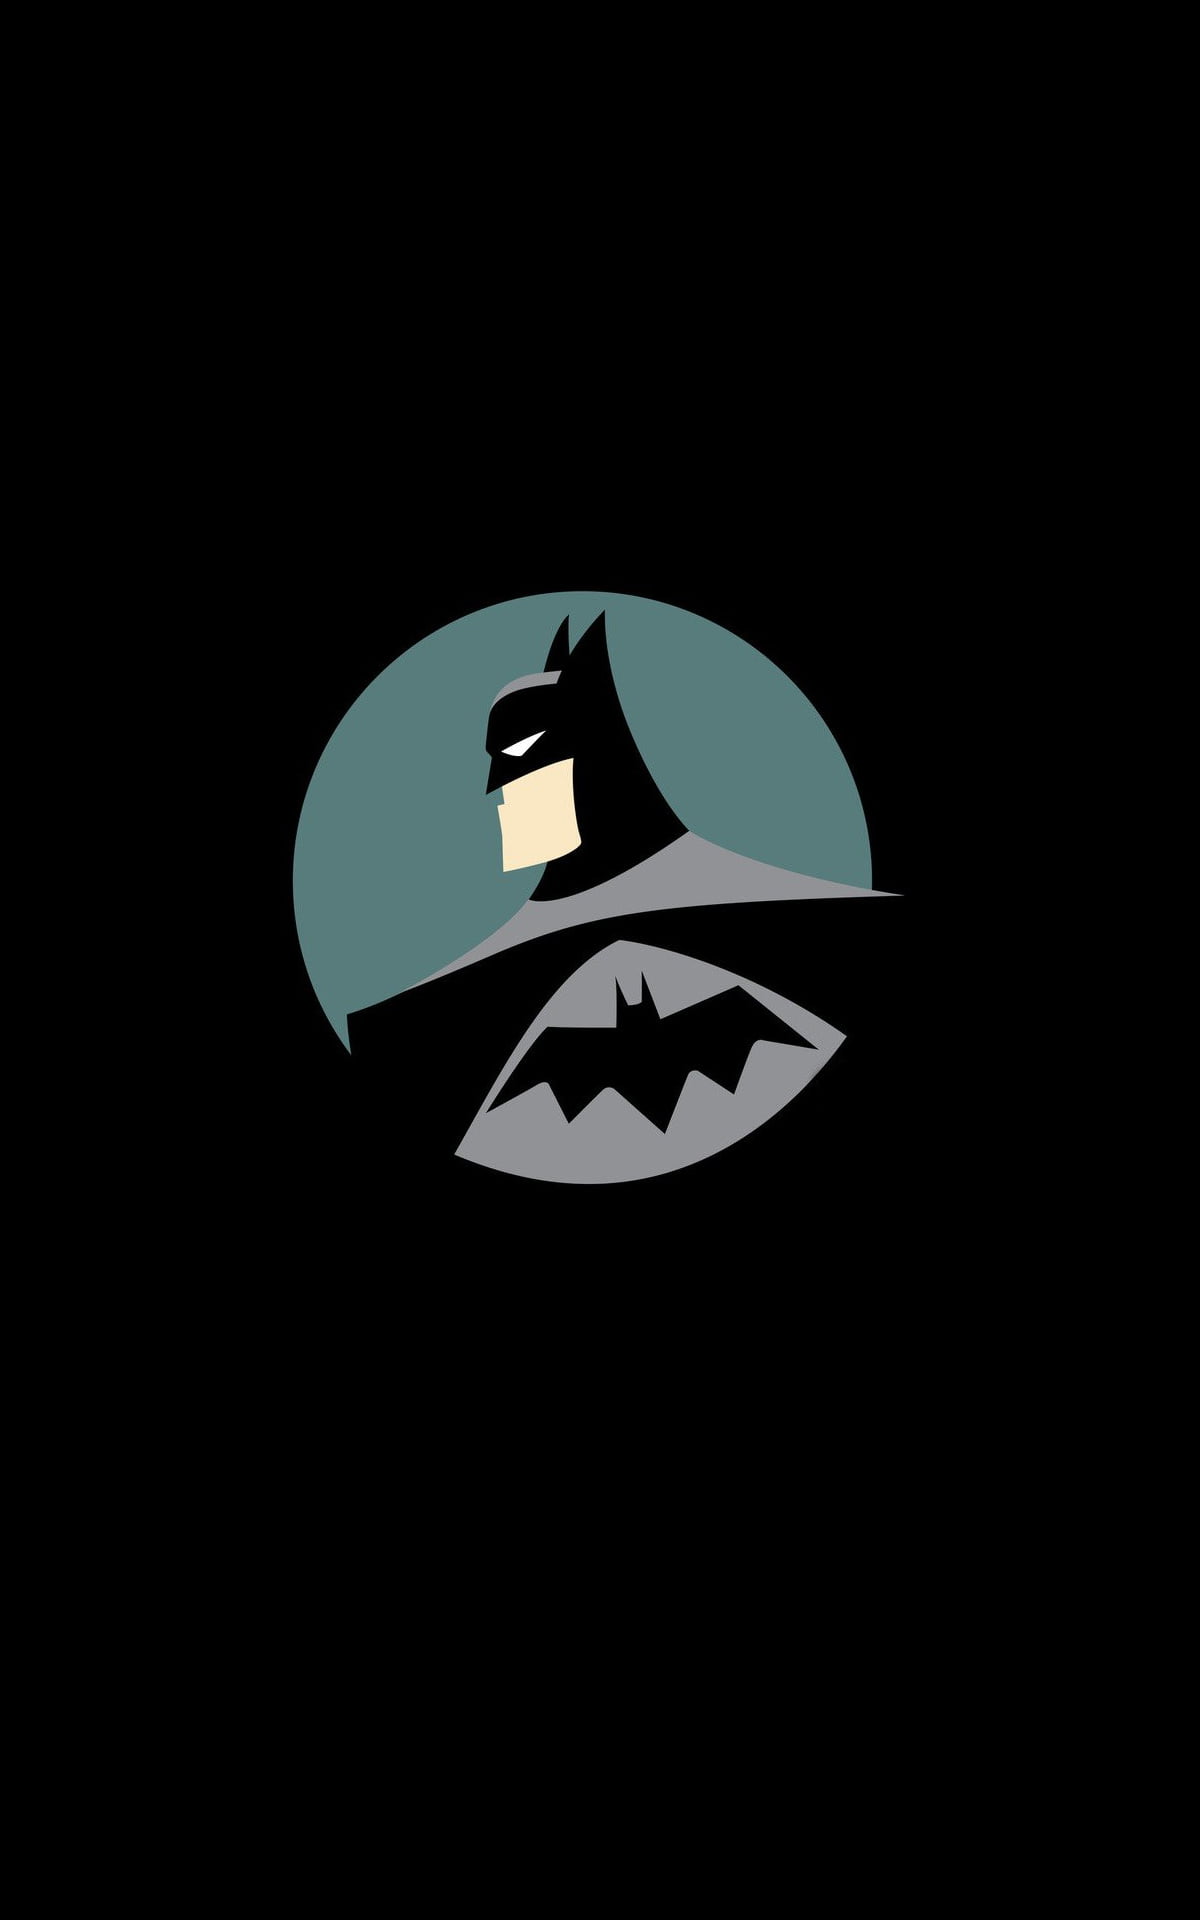 Batman illustration, Batman, DC Comics, superhero, minimalism